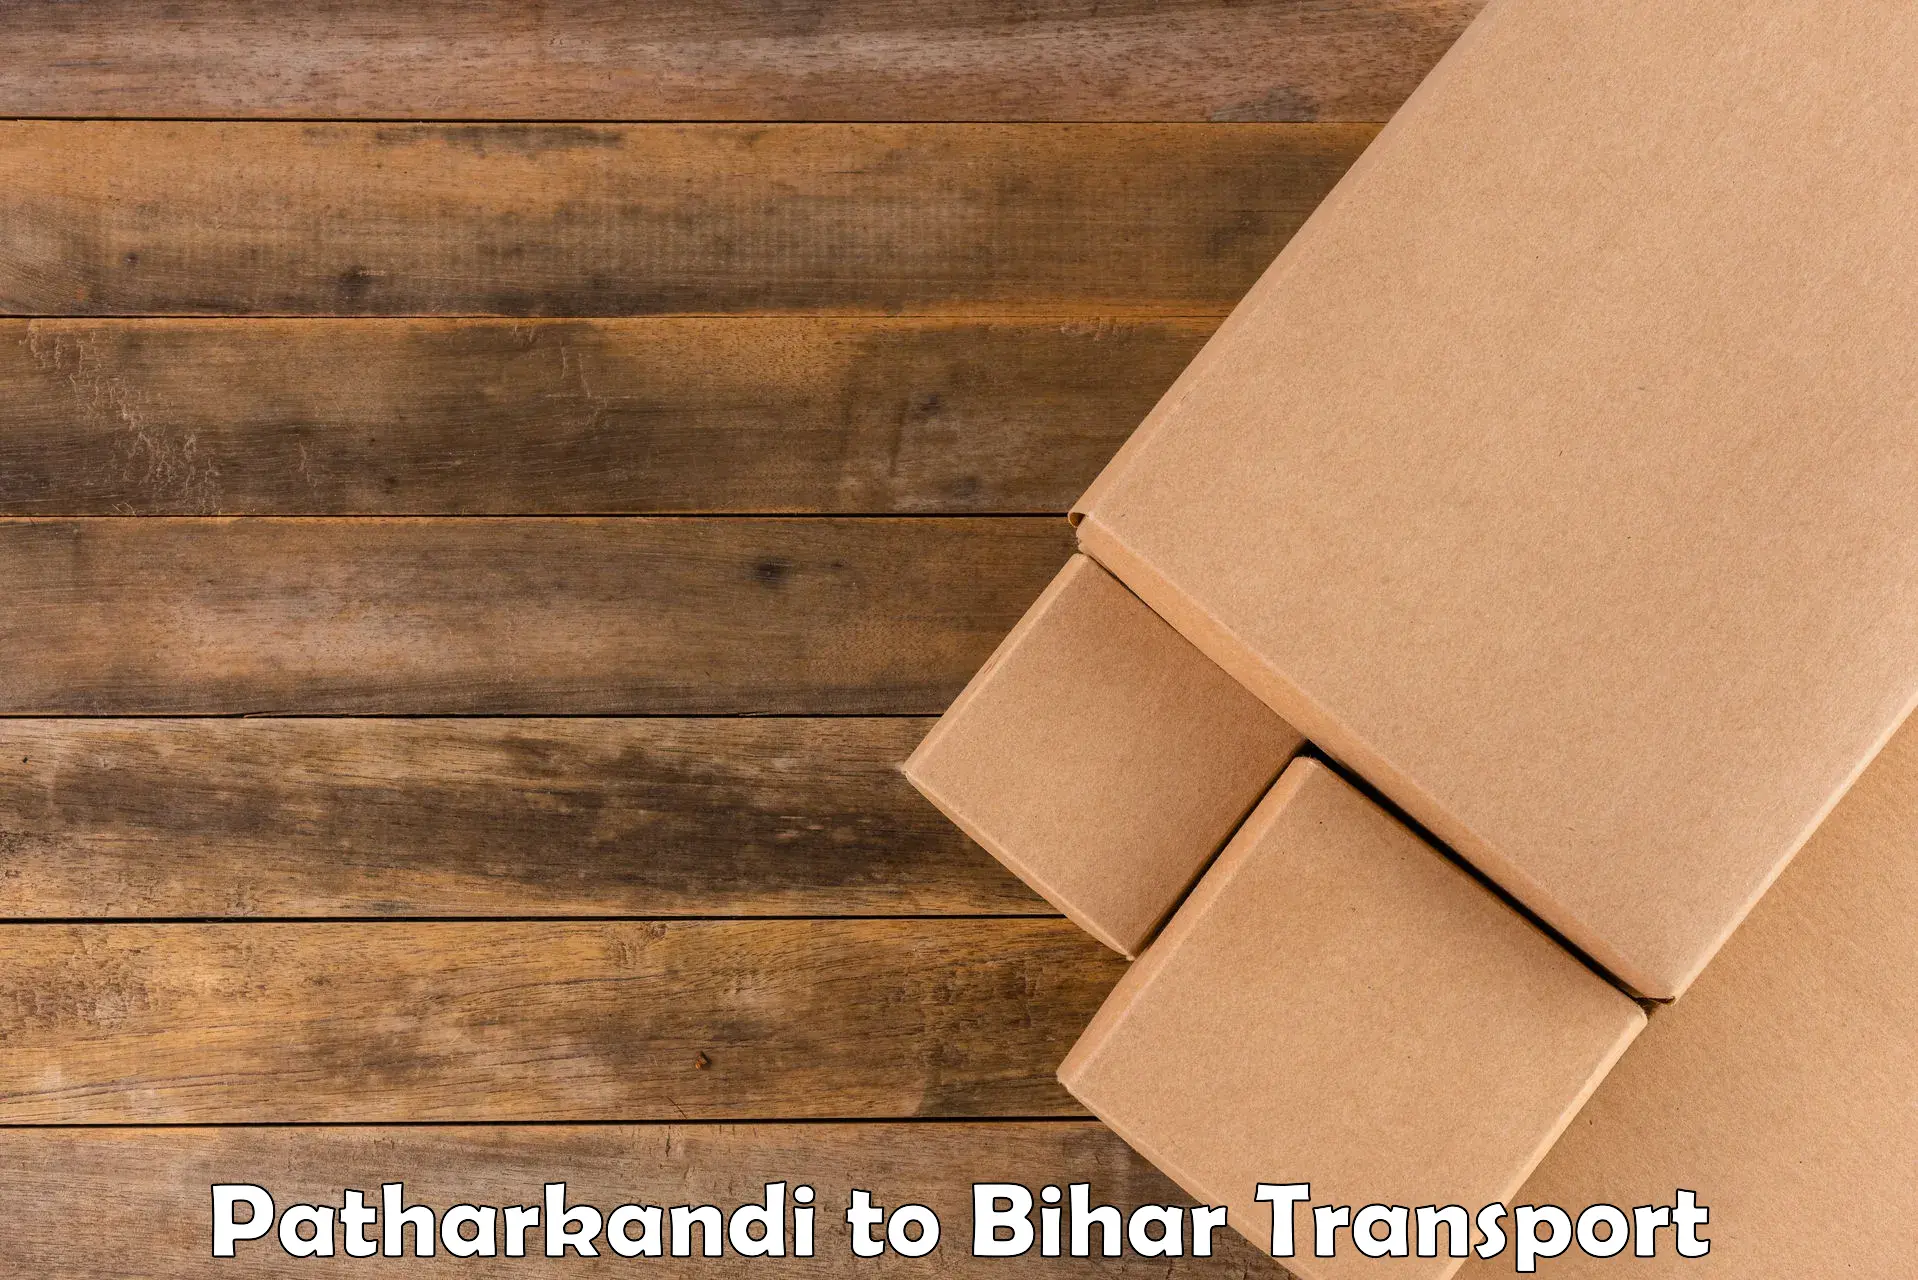 Truck transport companies in India Patharkandi to Arrah